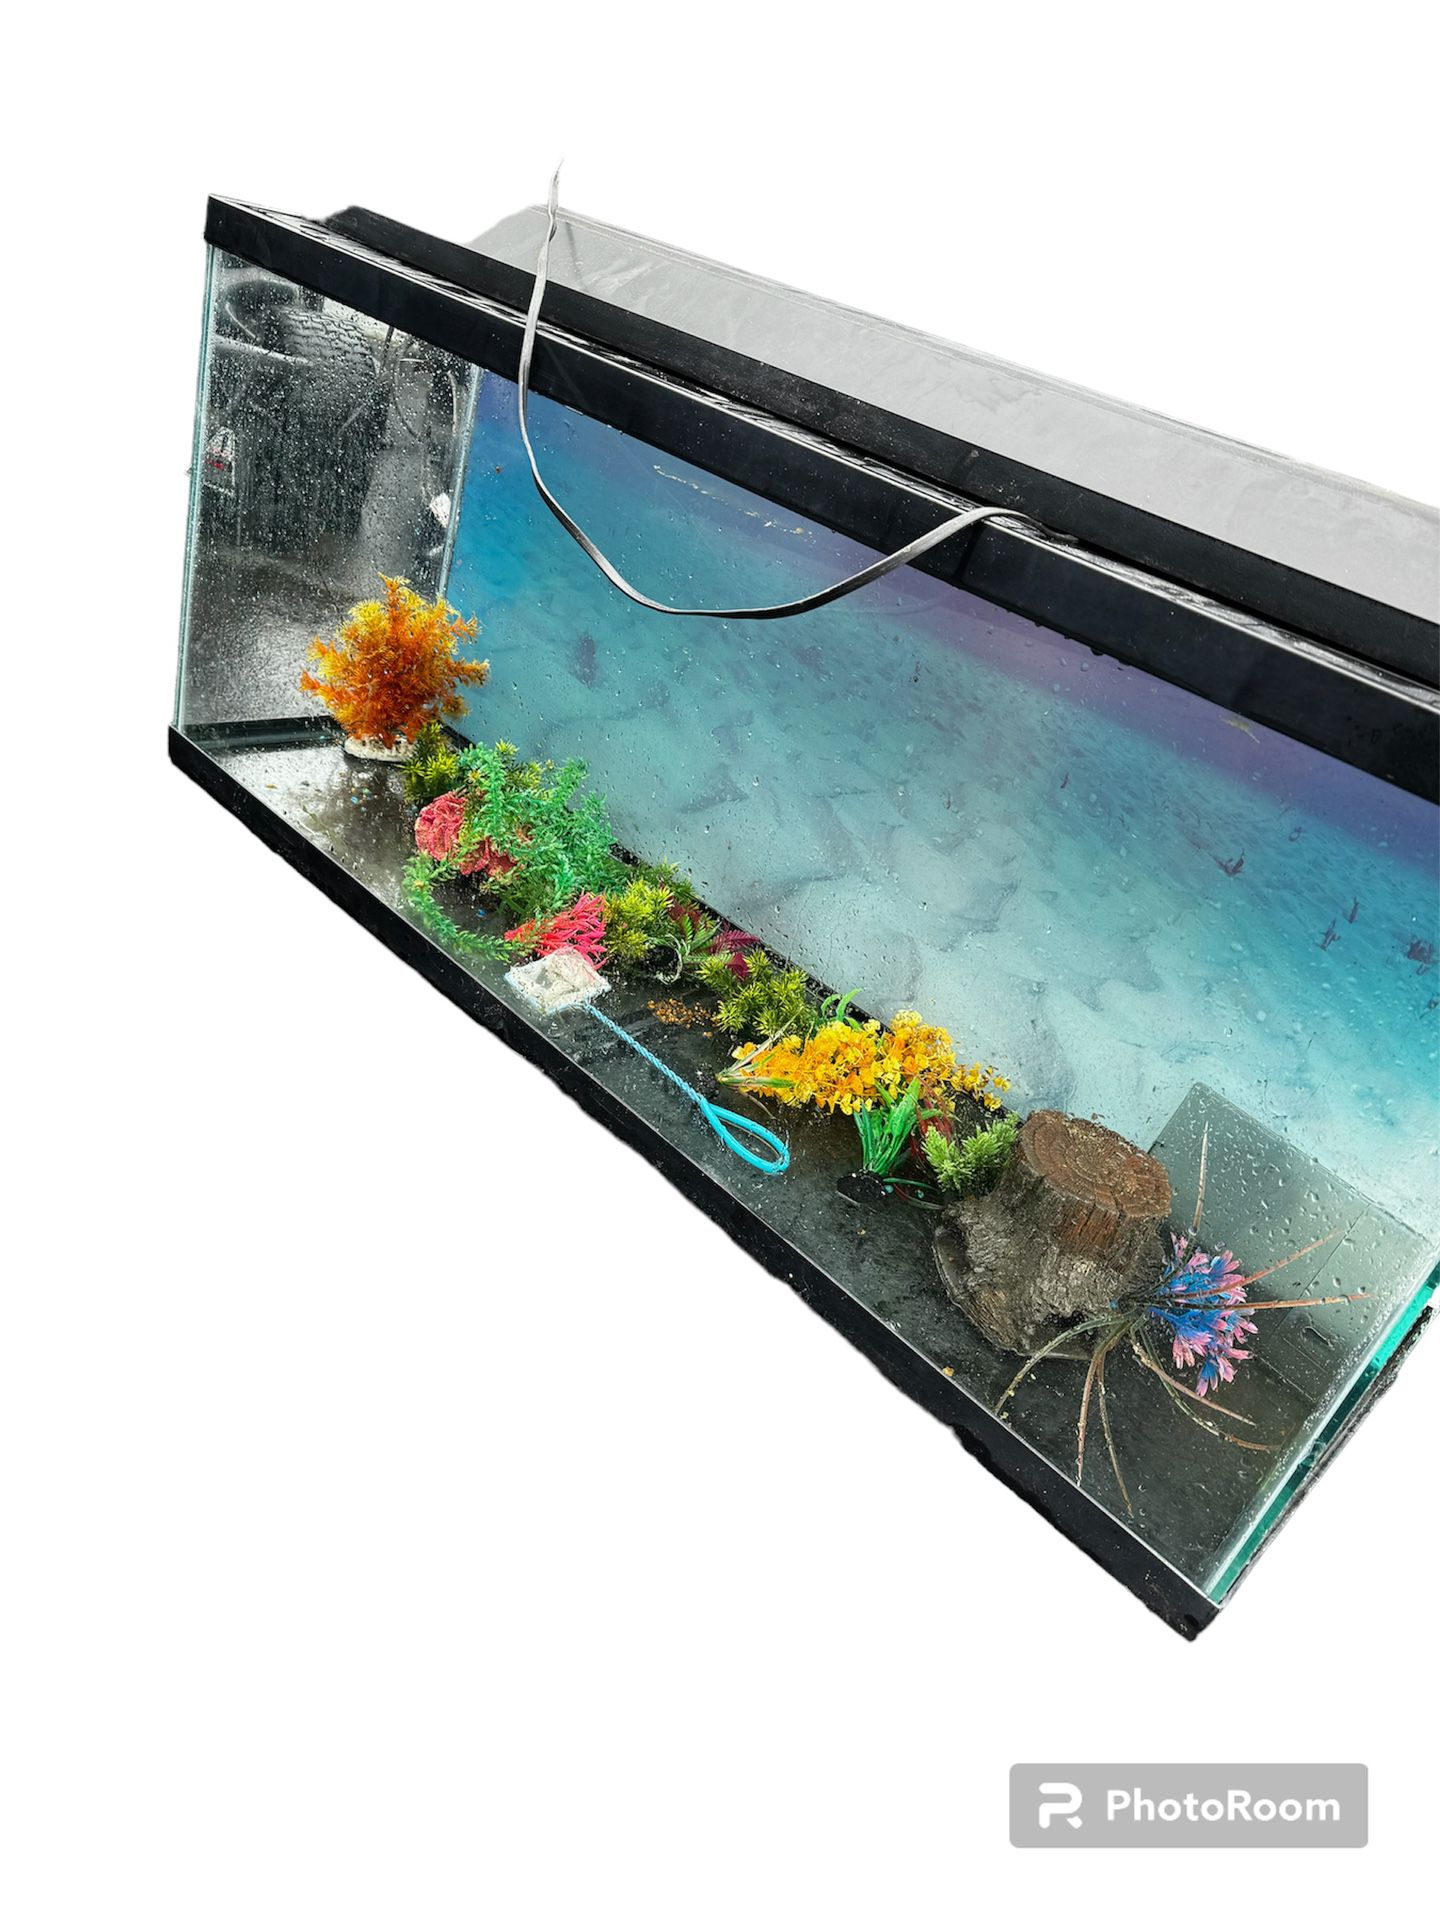 55 Gal. fish tank, stand, LED lights, Filter 100gal.